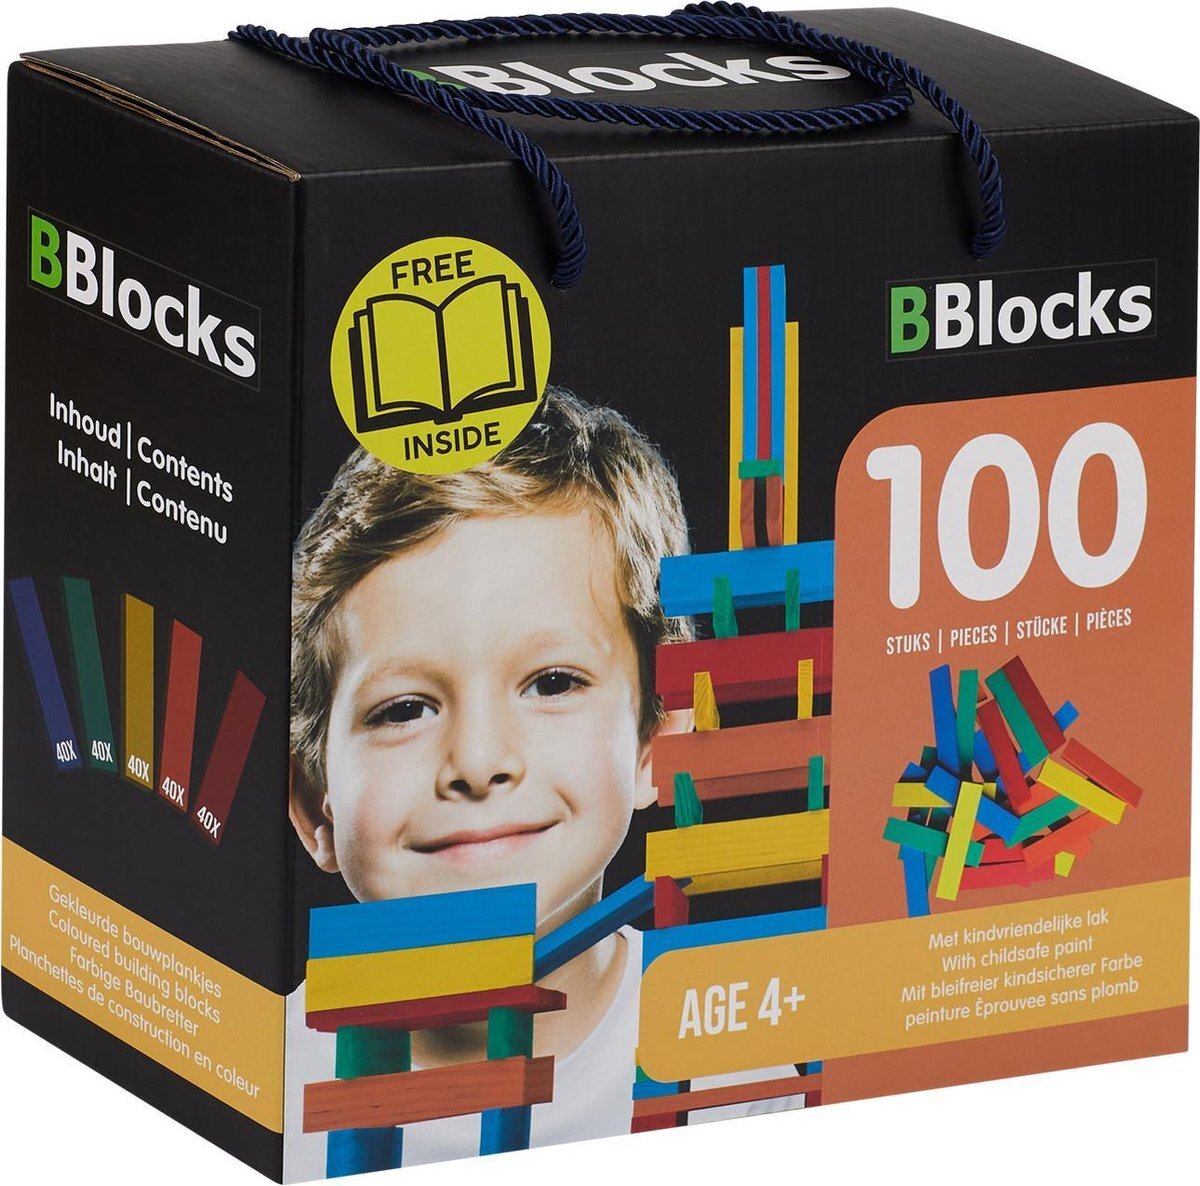 Bblocks BBL100KL-N2 Speelgoedbouwboards Color, 100 stuks